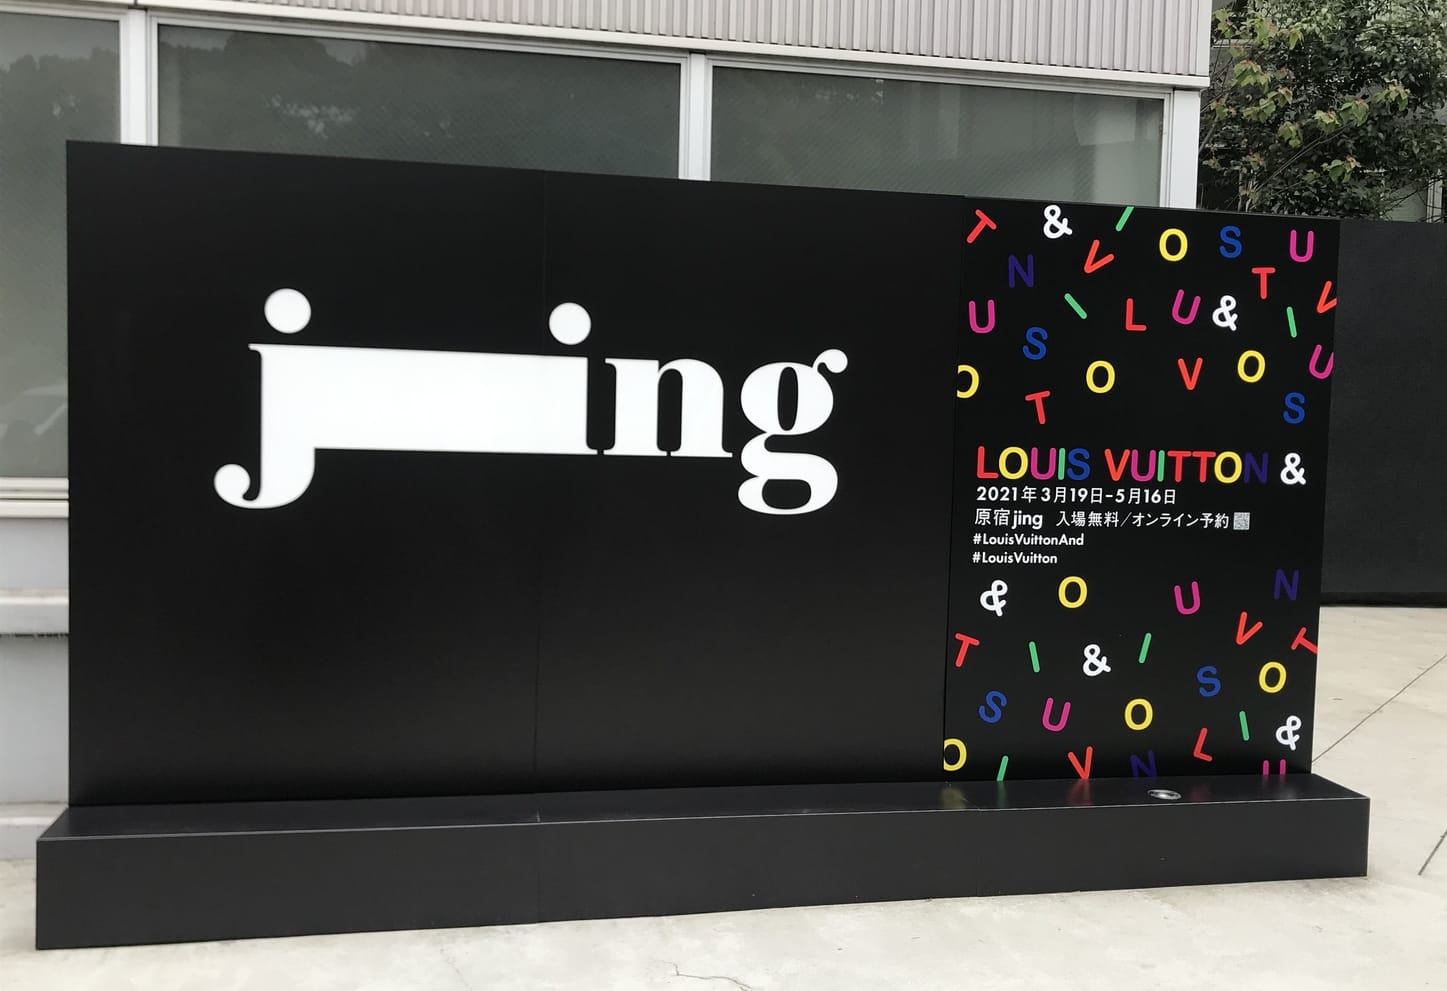 Louis Vuitton exhibition